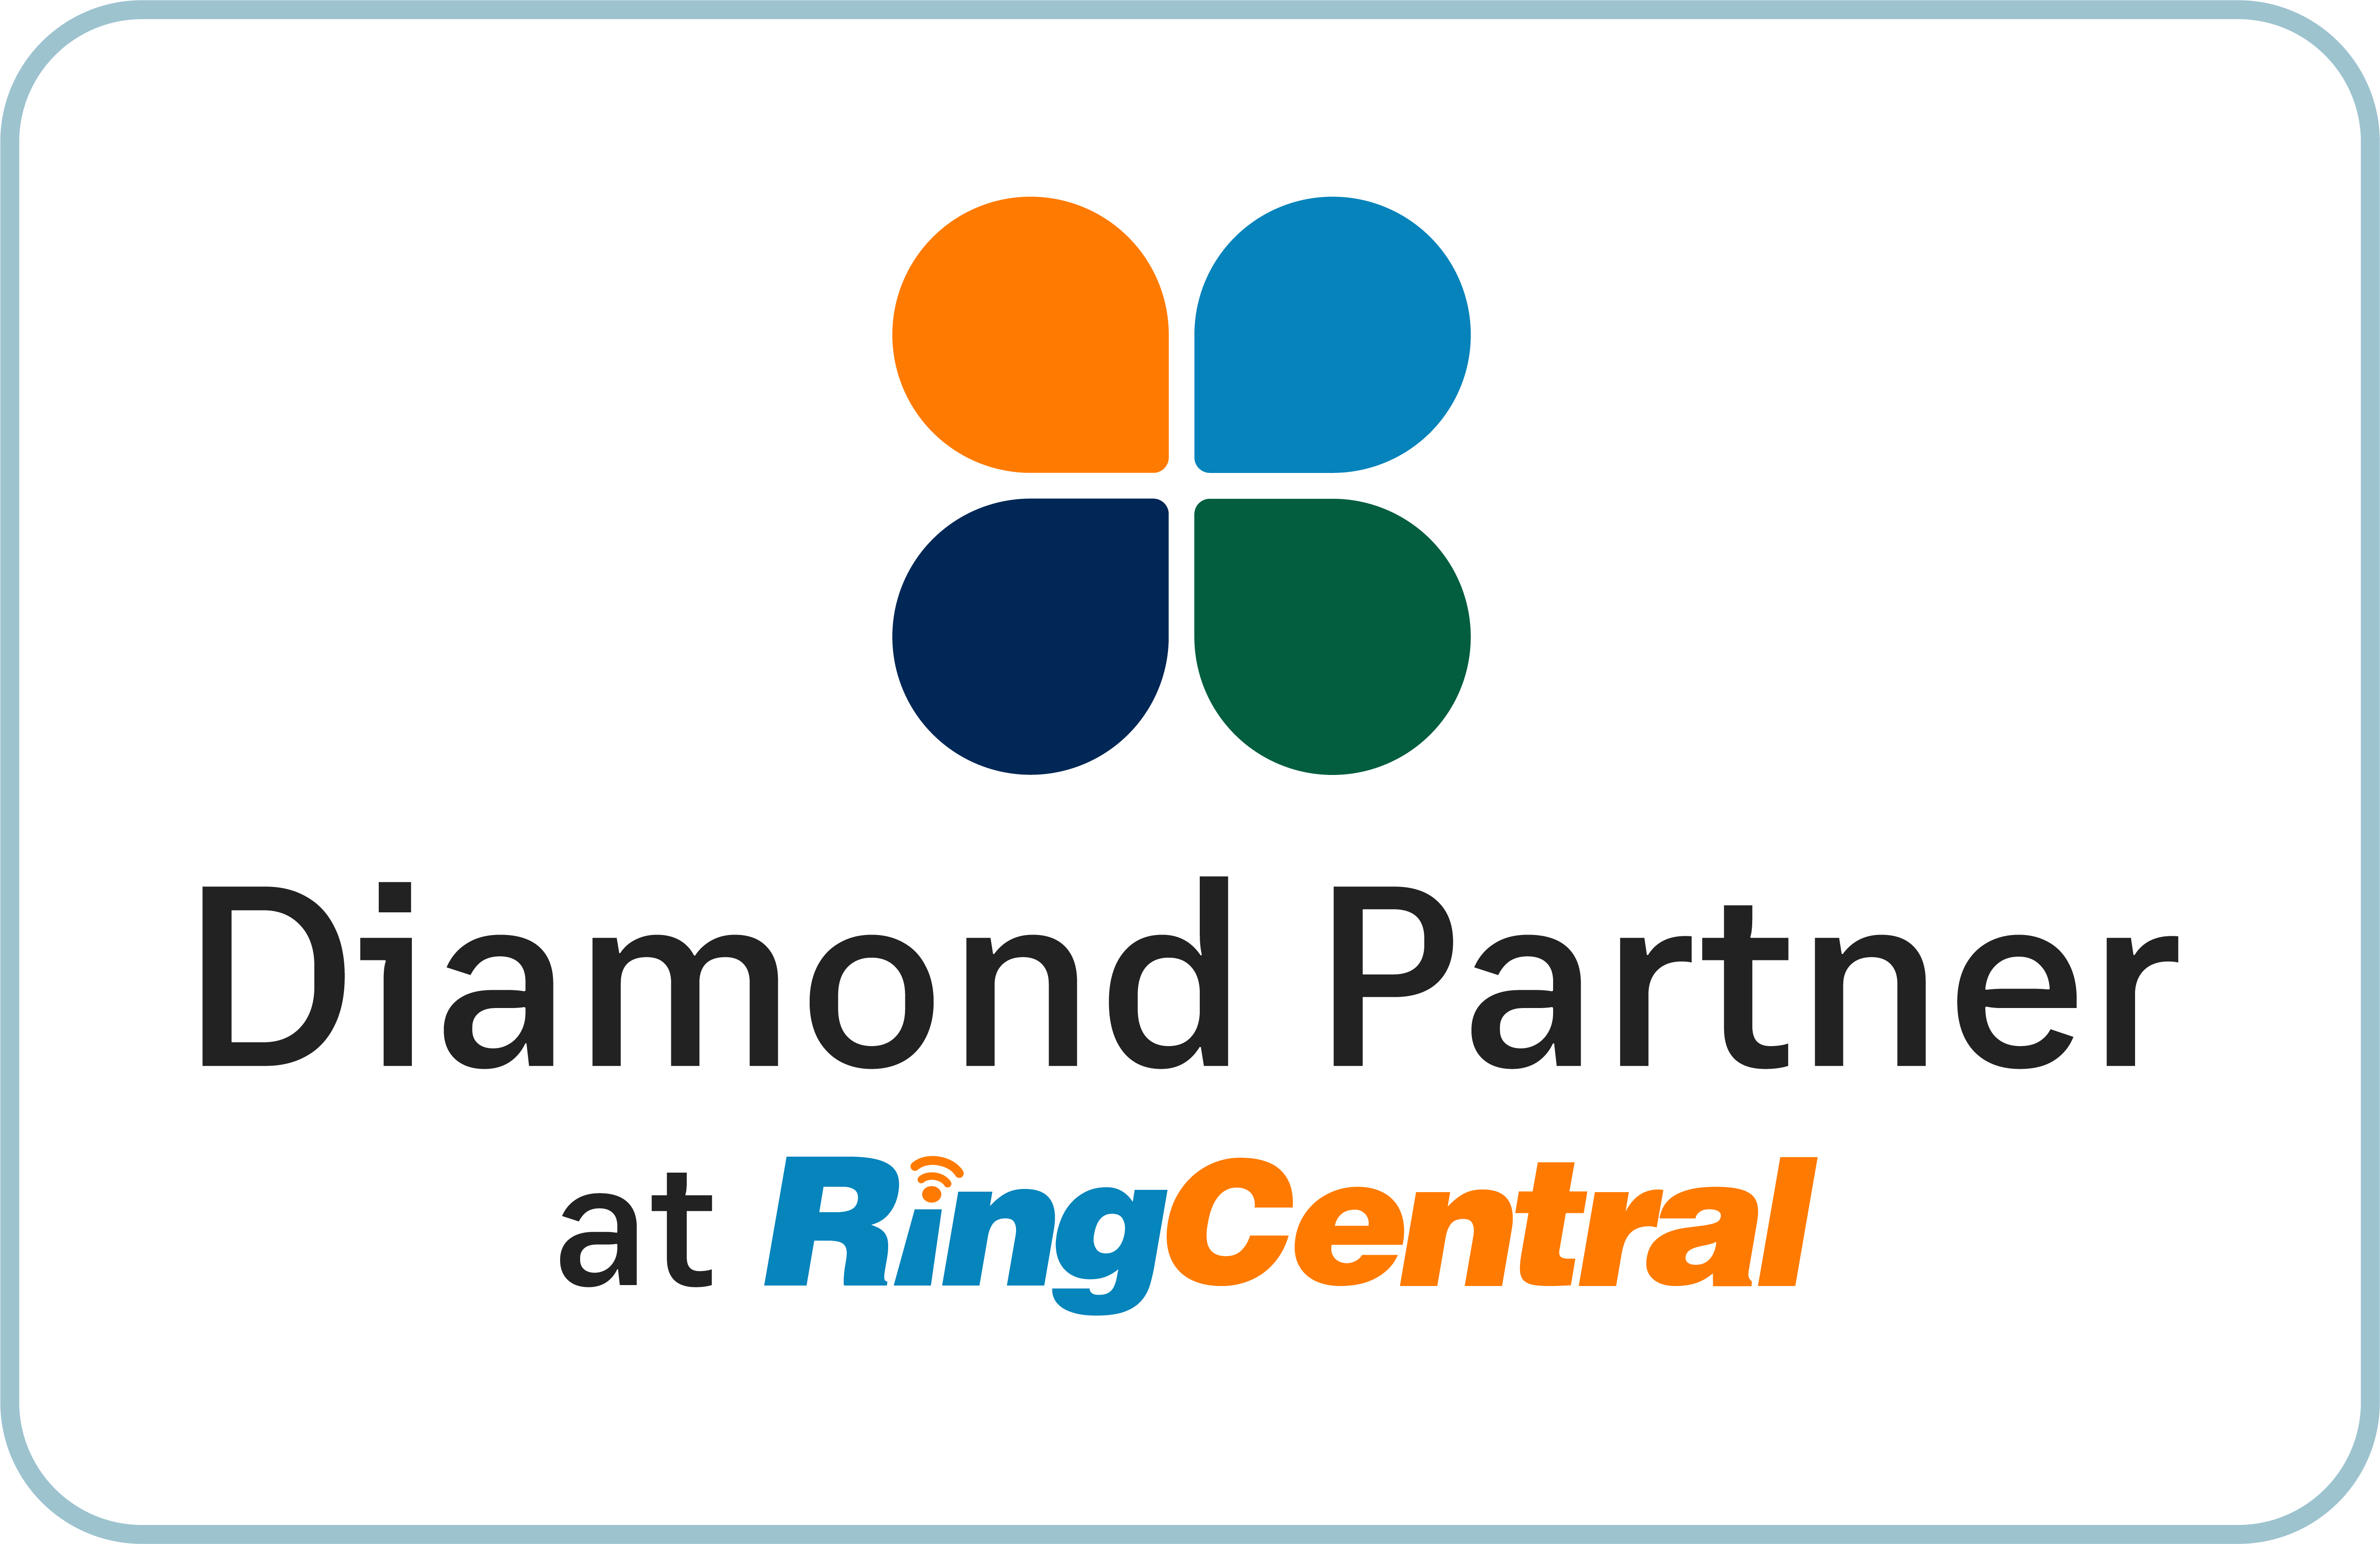 RingCentral diamond partner logo